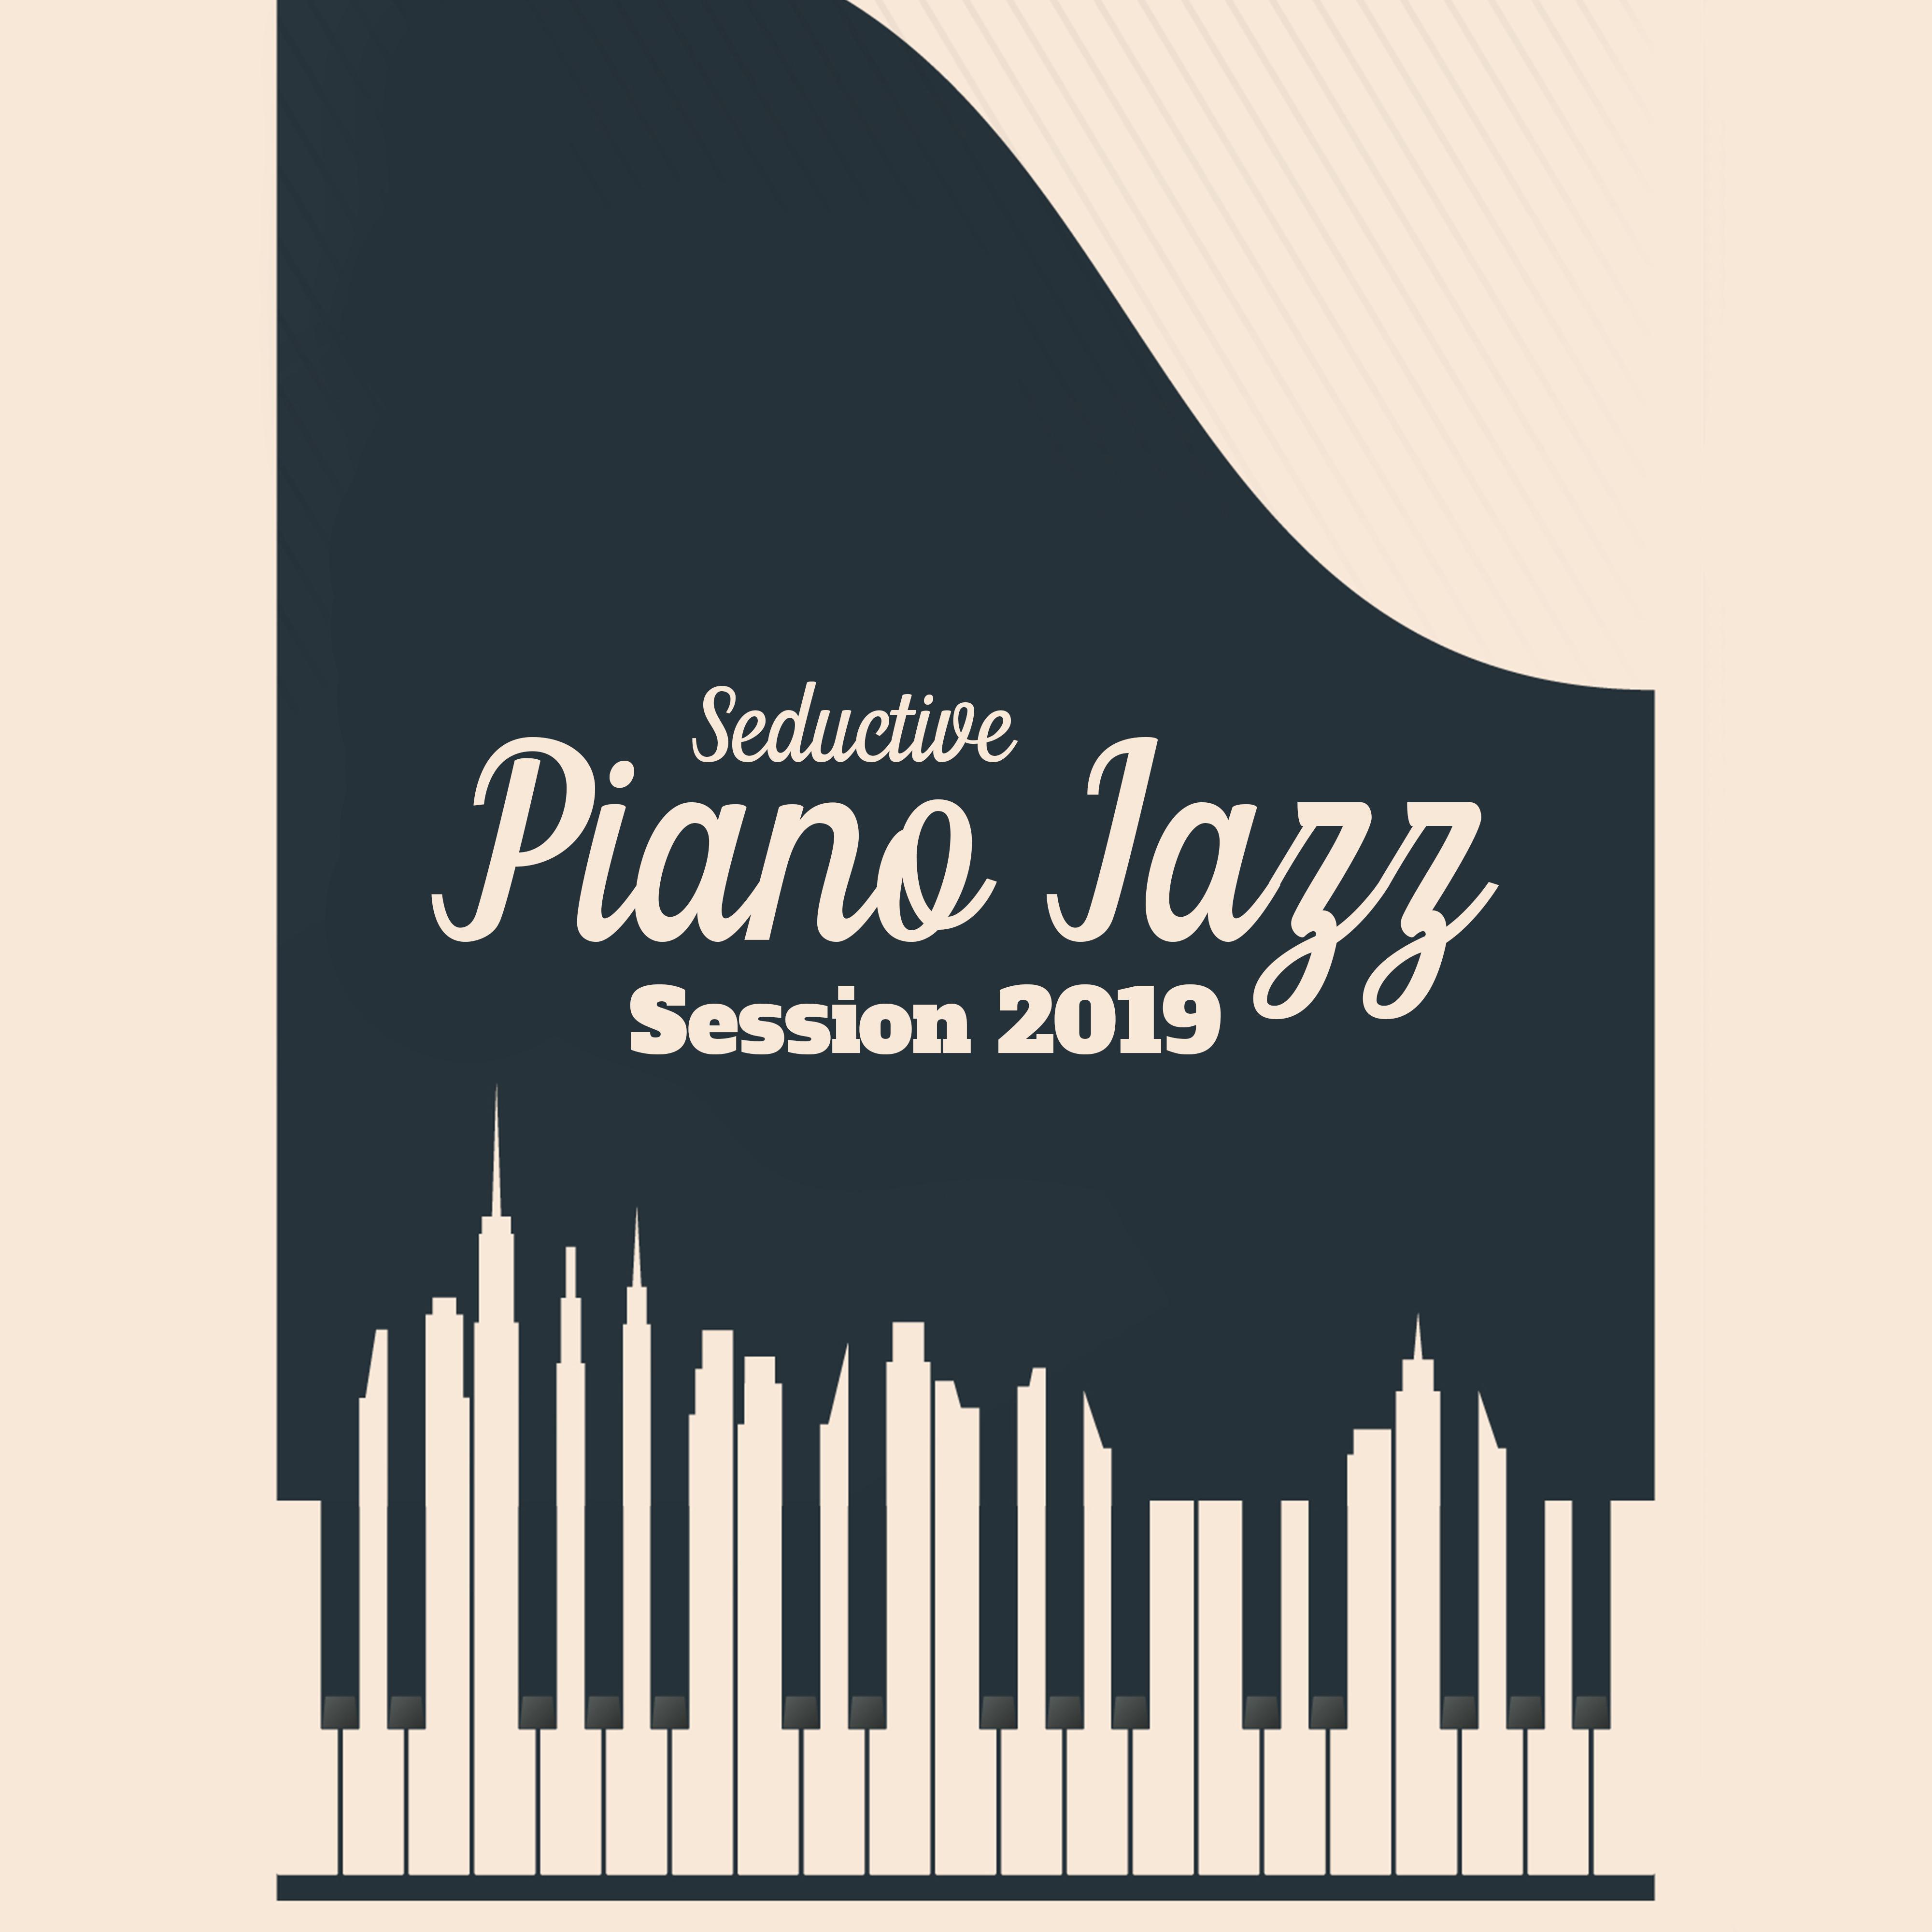 Seductive Piano Jazz Session 2019